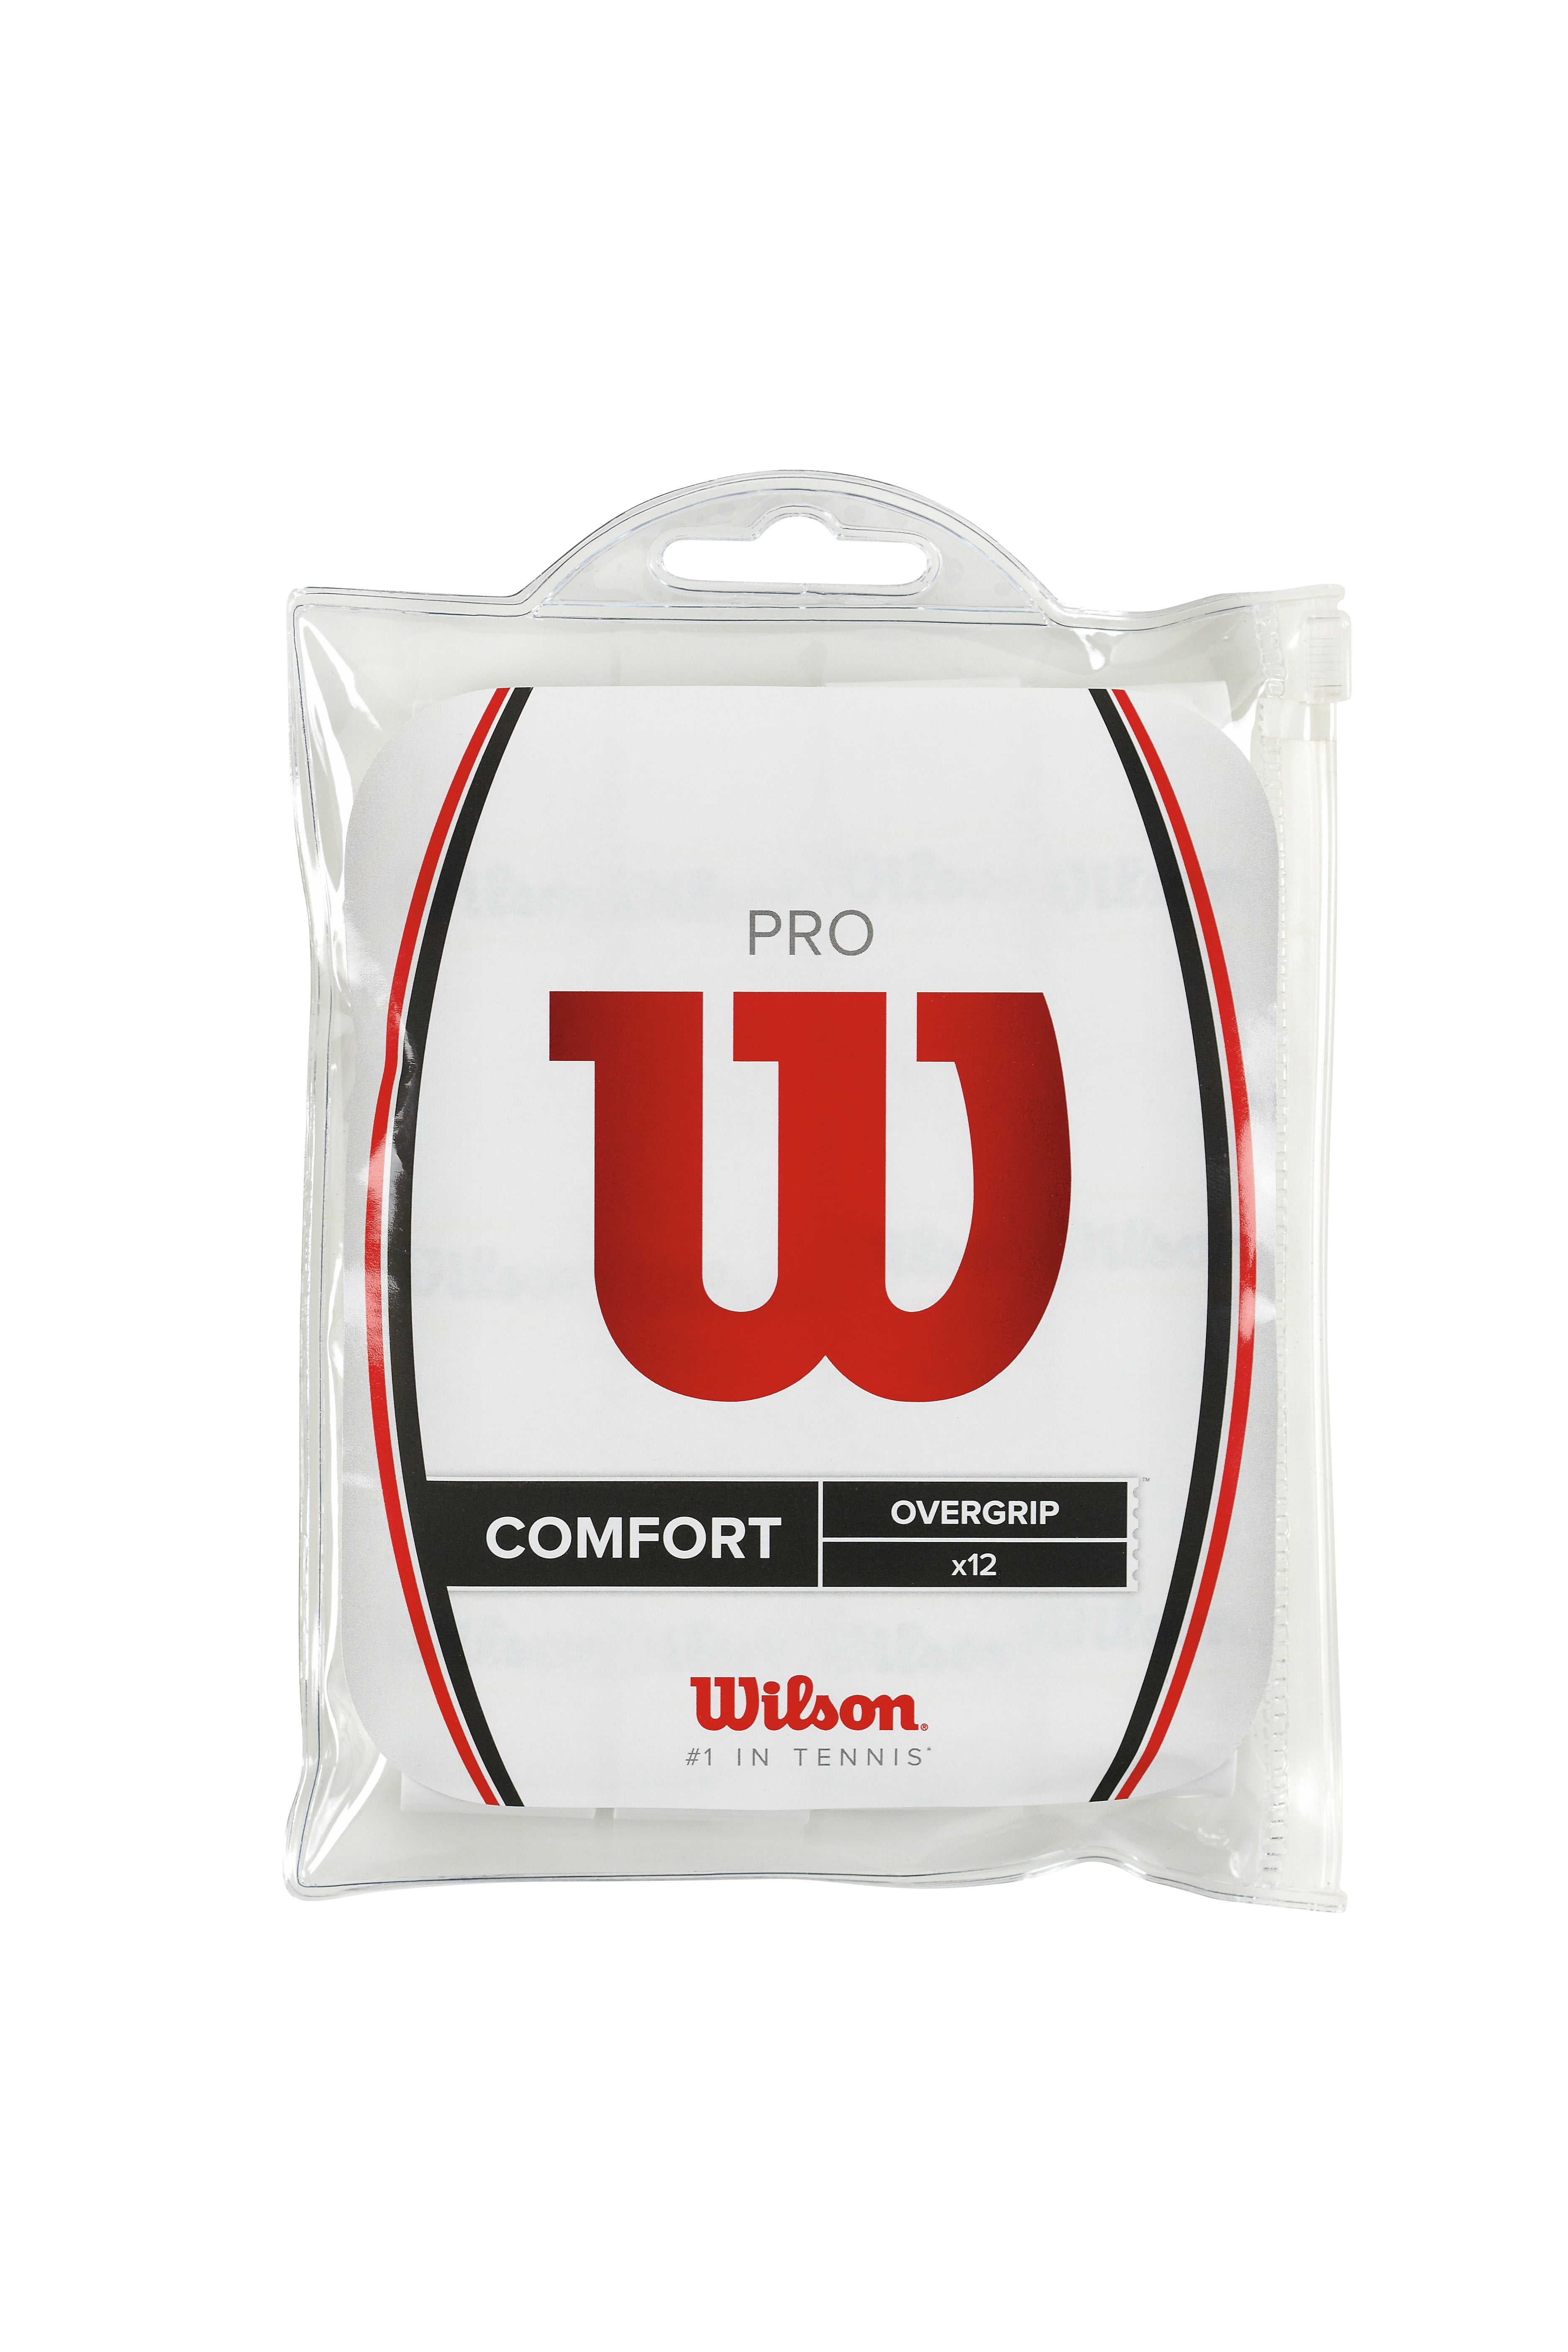 Wilson Pro Overgrip 12 Pack White Comfort Tennis Badminton Tape Racket WRZ4016WH 